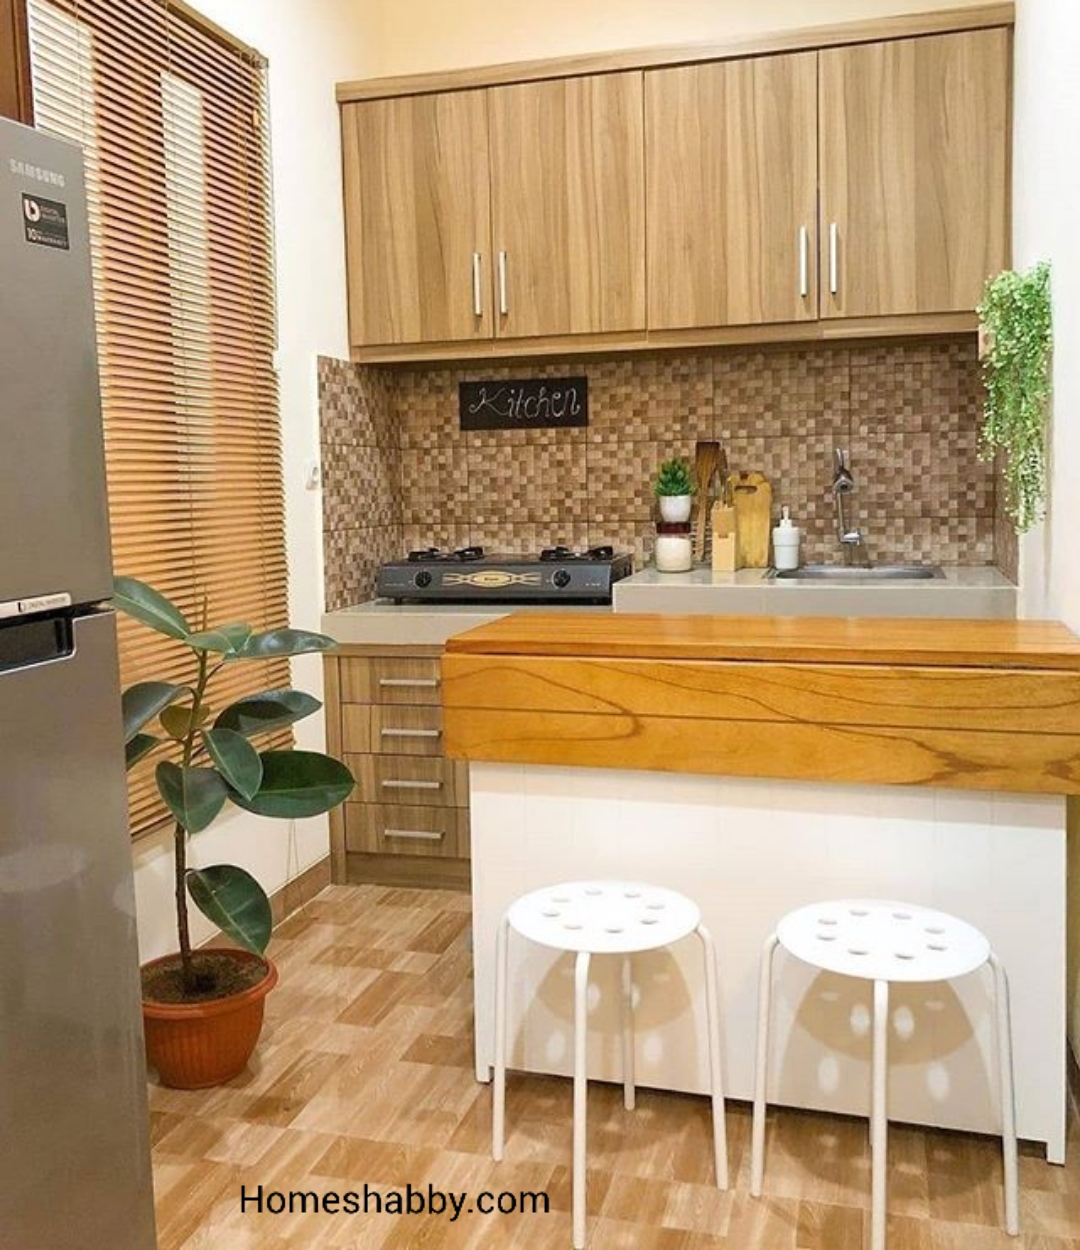 Kumpulan Desain Dapur Minimalis Ukuran 1 X 1 M Terabaru Terasa Lebih Lapang Homeshabbycom Design Home Plans